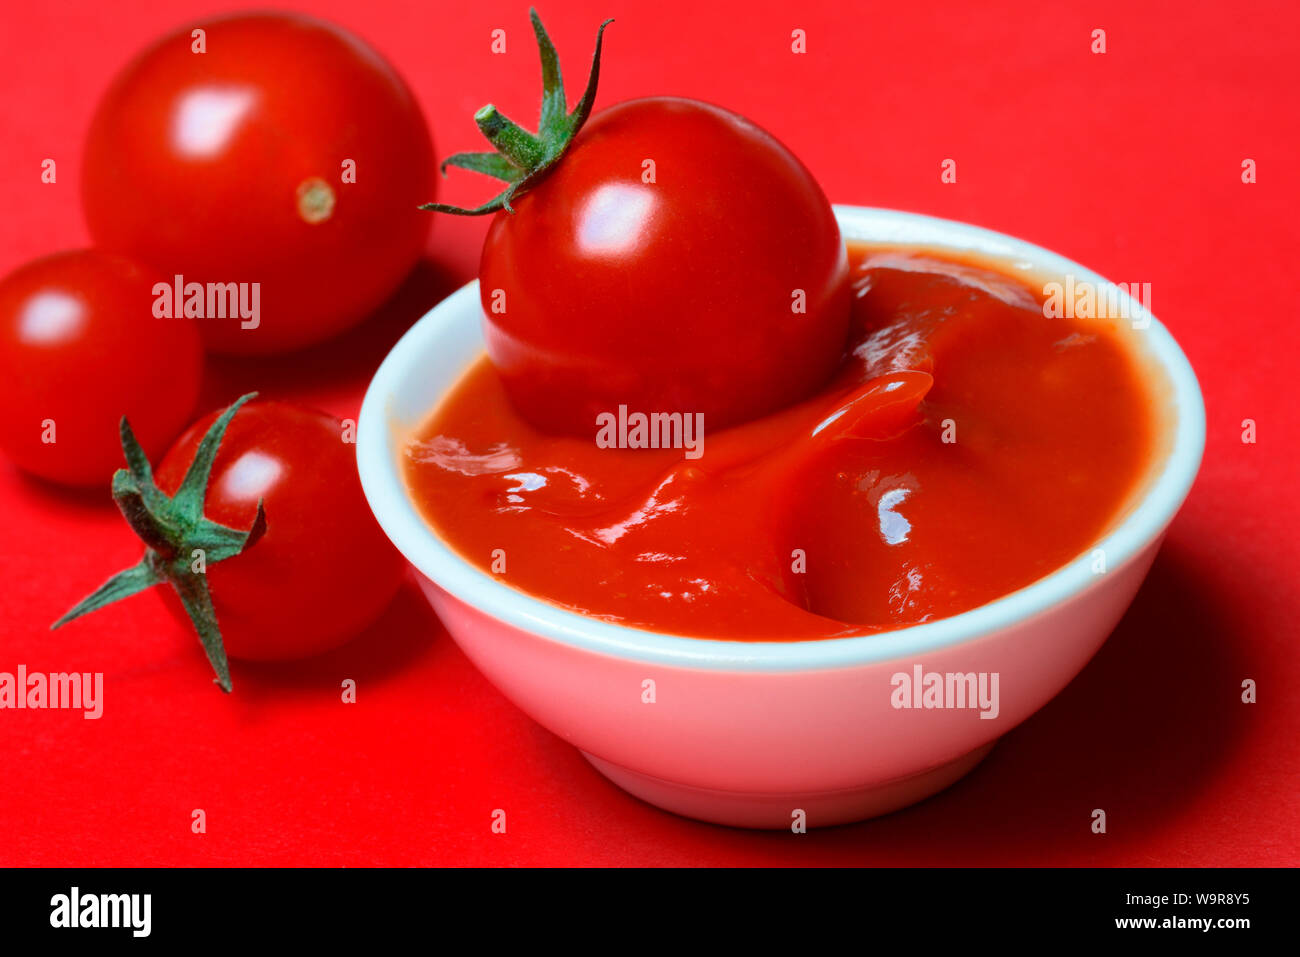 tomato ketchup and tomatoes Stock Photo